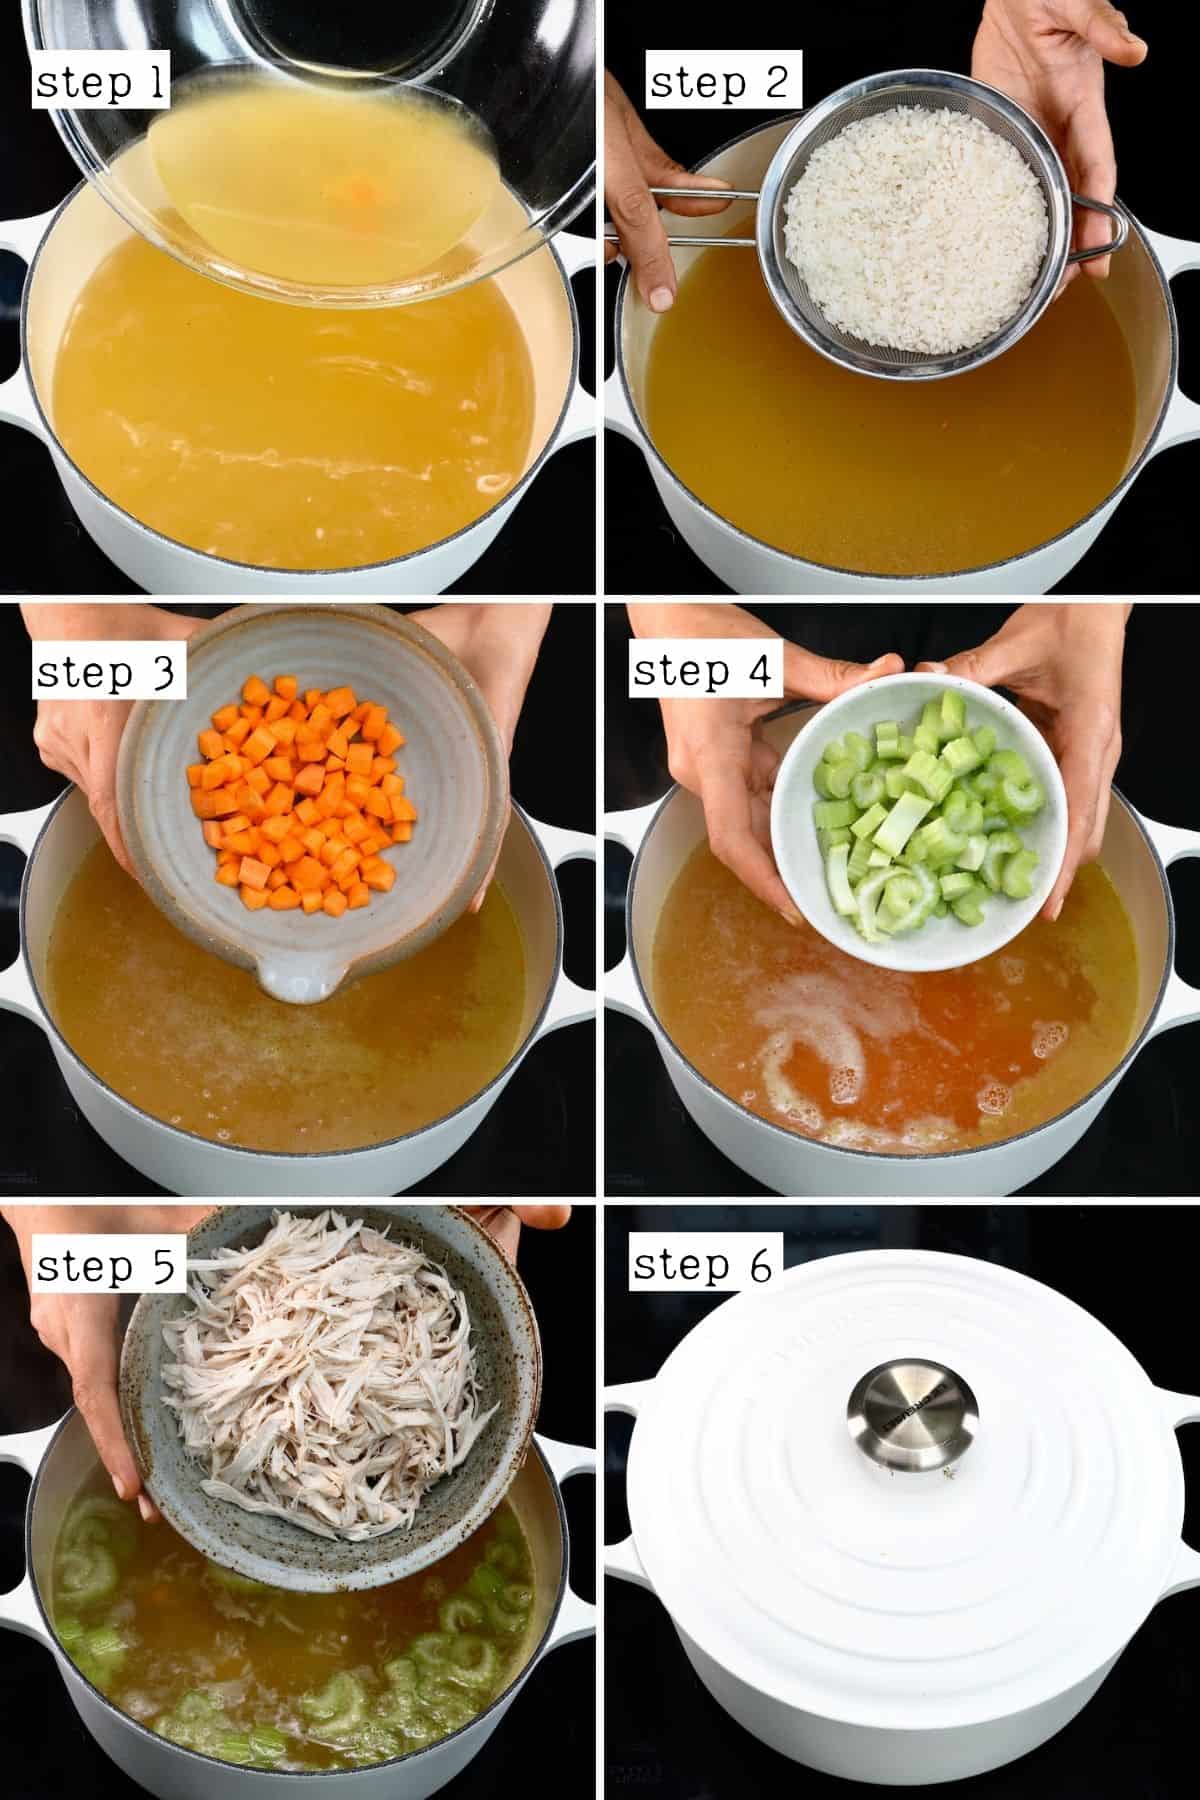 Steps for preparing chicken soup